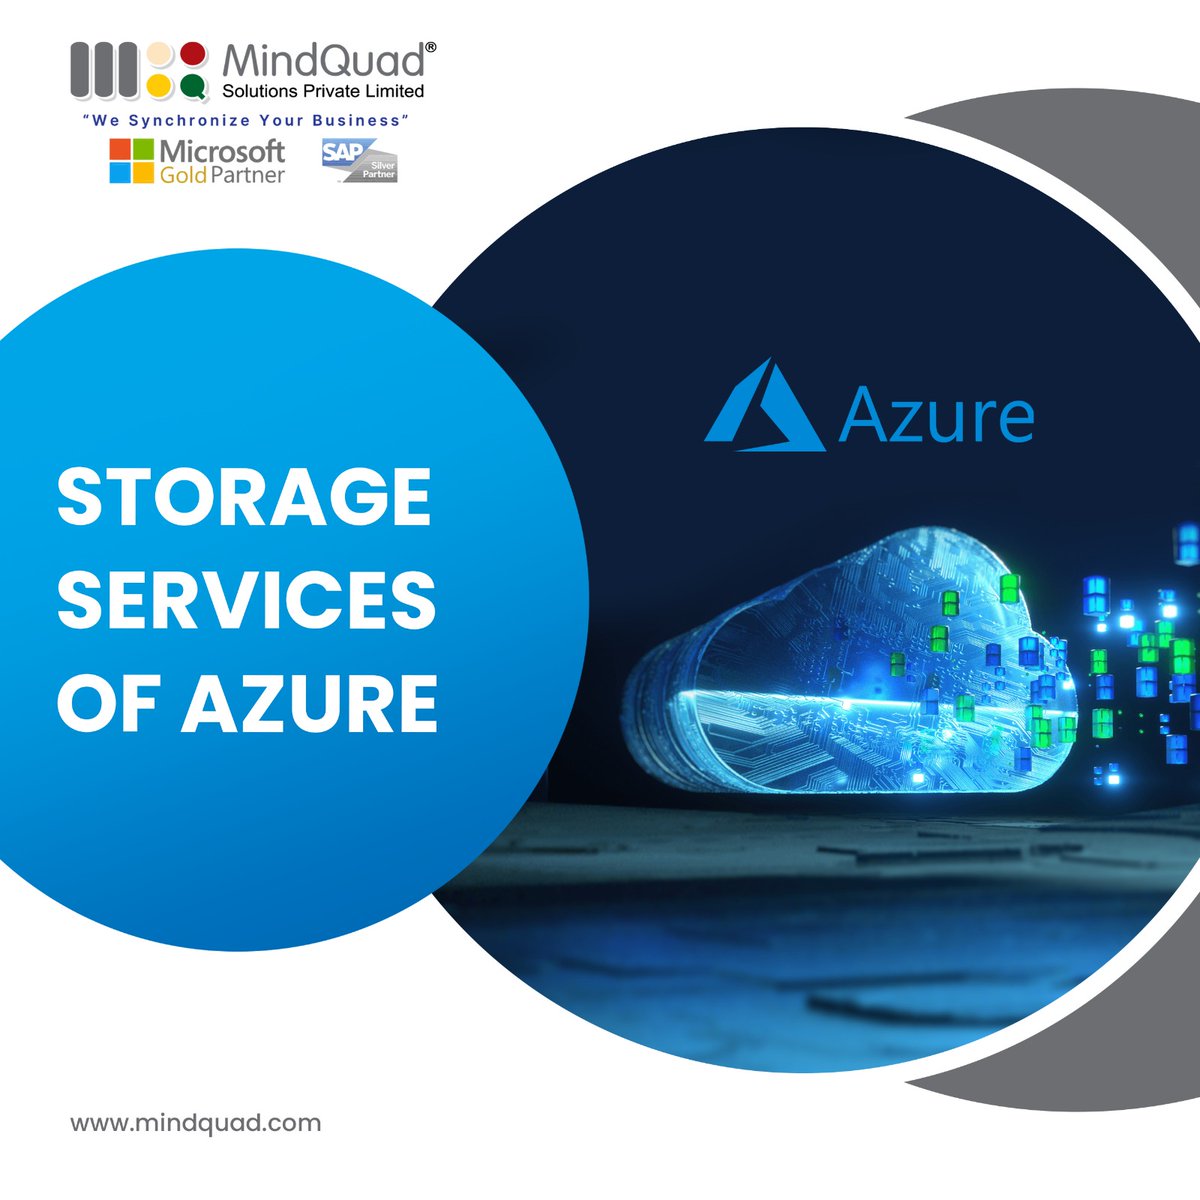 Storage Services of Azure

#MindQuad #TechQuad #CSP #VirtualMachines #Azure #Storage
  
Explore more about our solution: mindquad.com
Drop your inquiries: info@mindquad.com